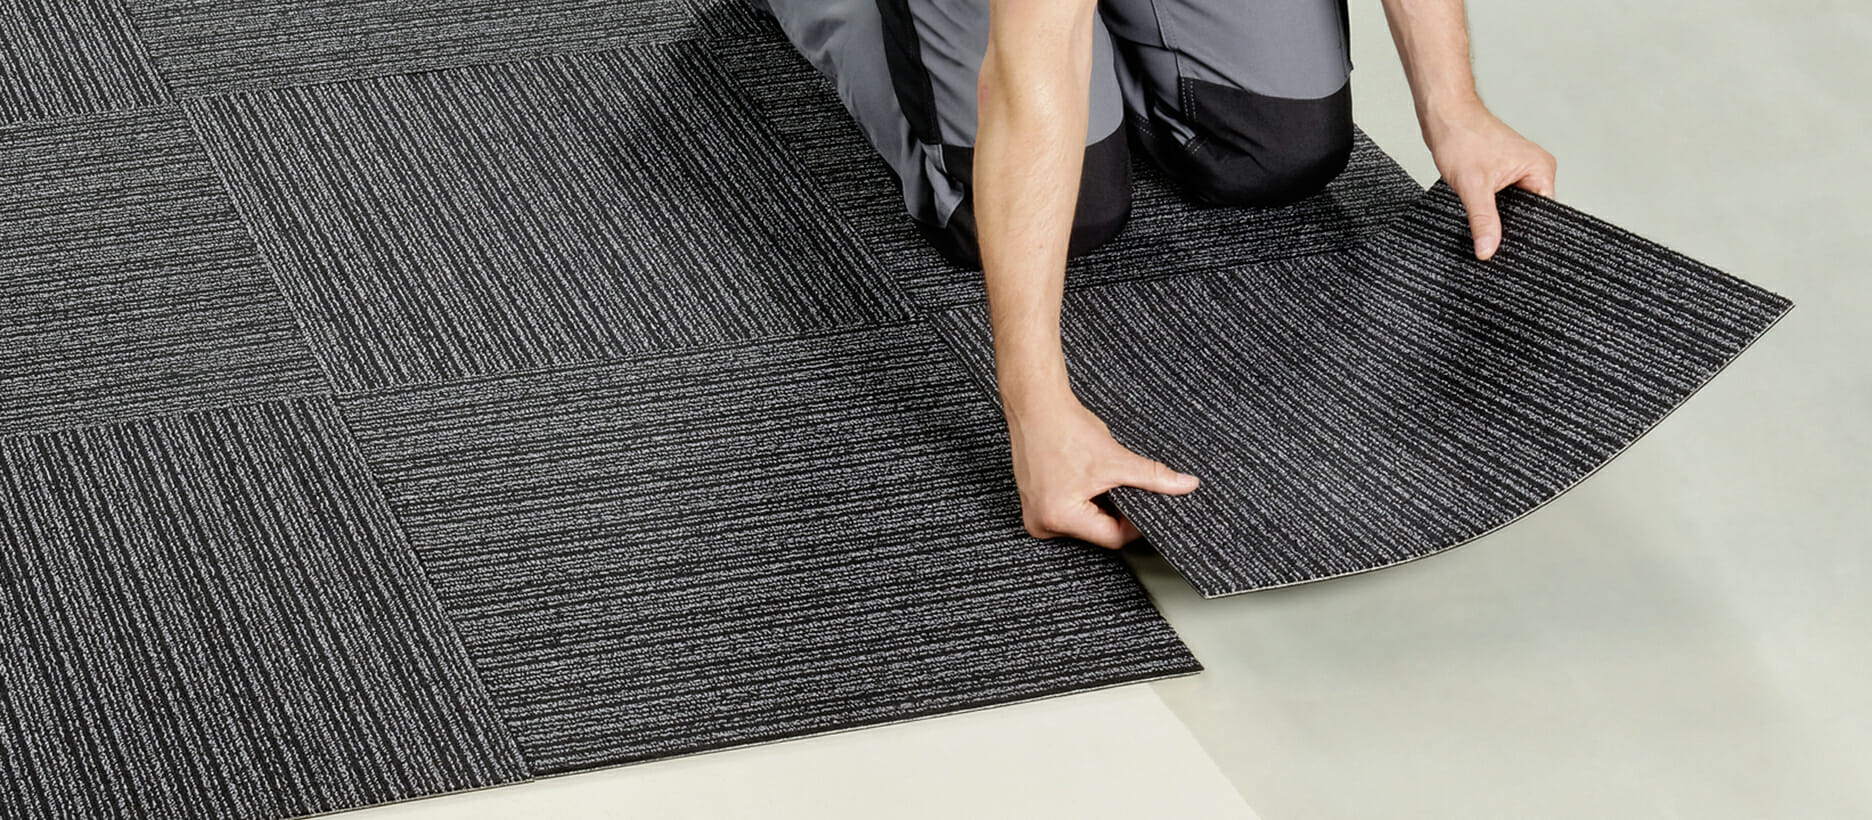 Henry 356 carpet and carpet tiles job installation sample